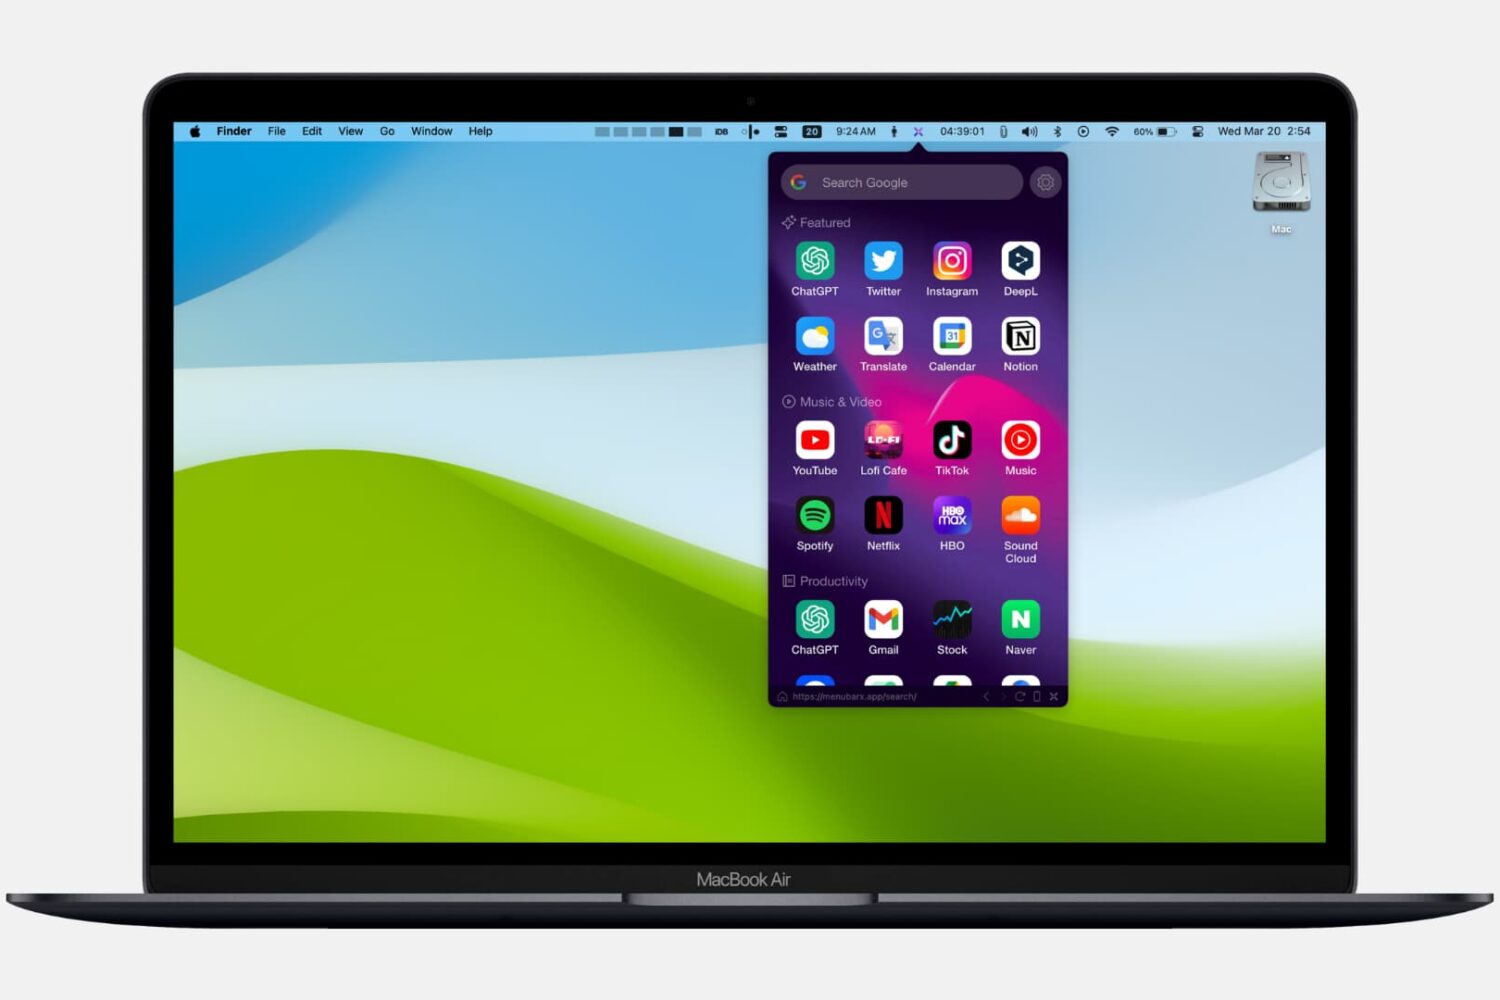 MacBook Air with MenuBarX app on the screen